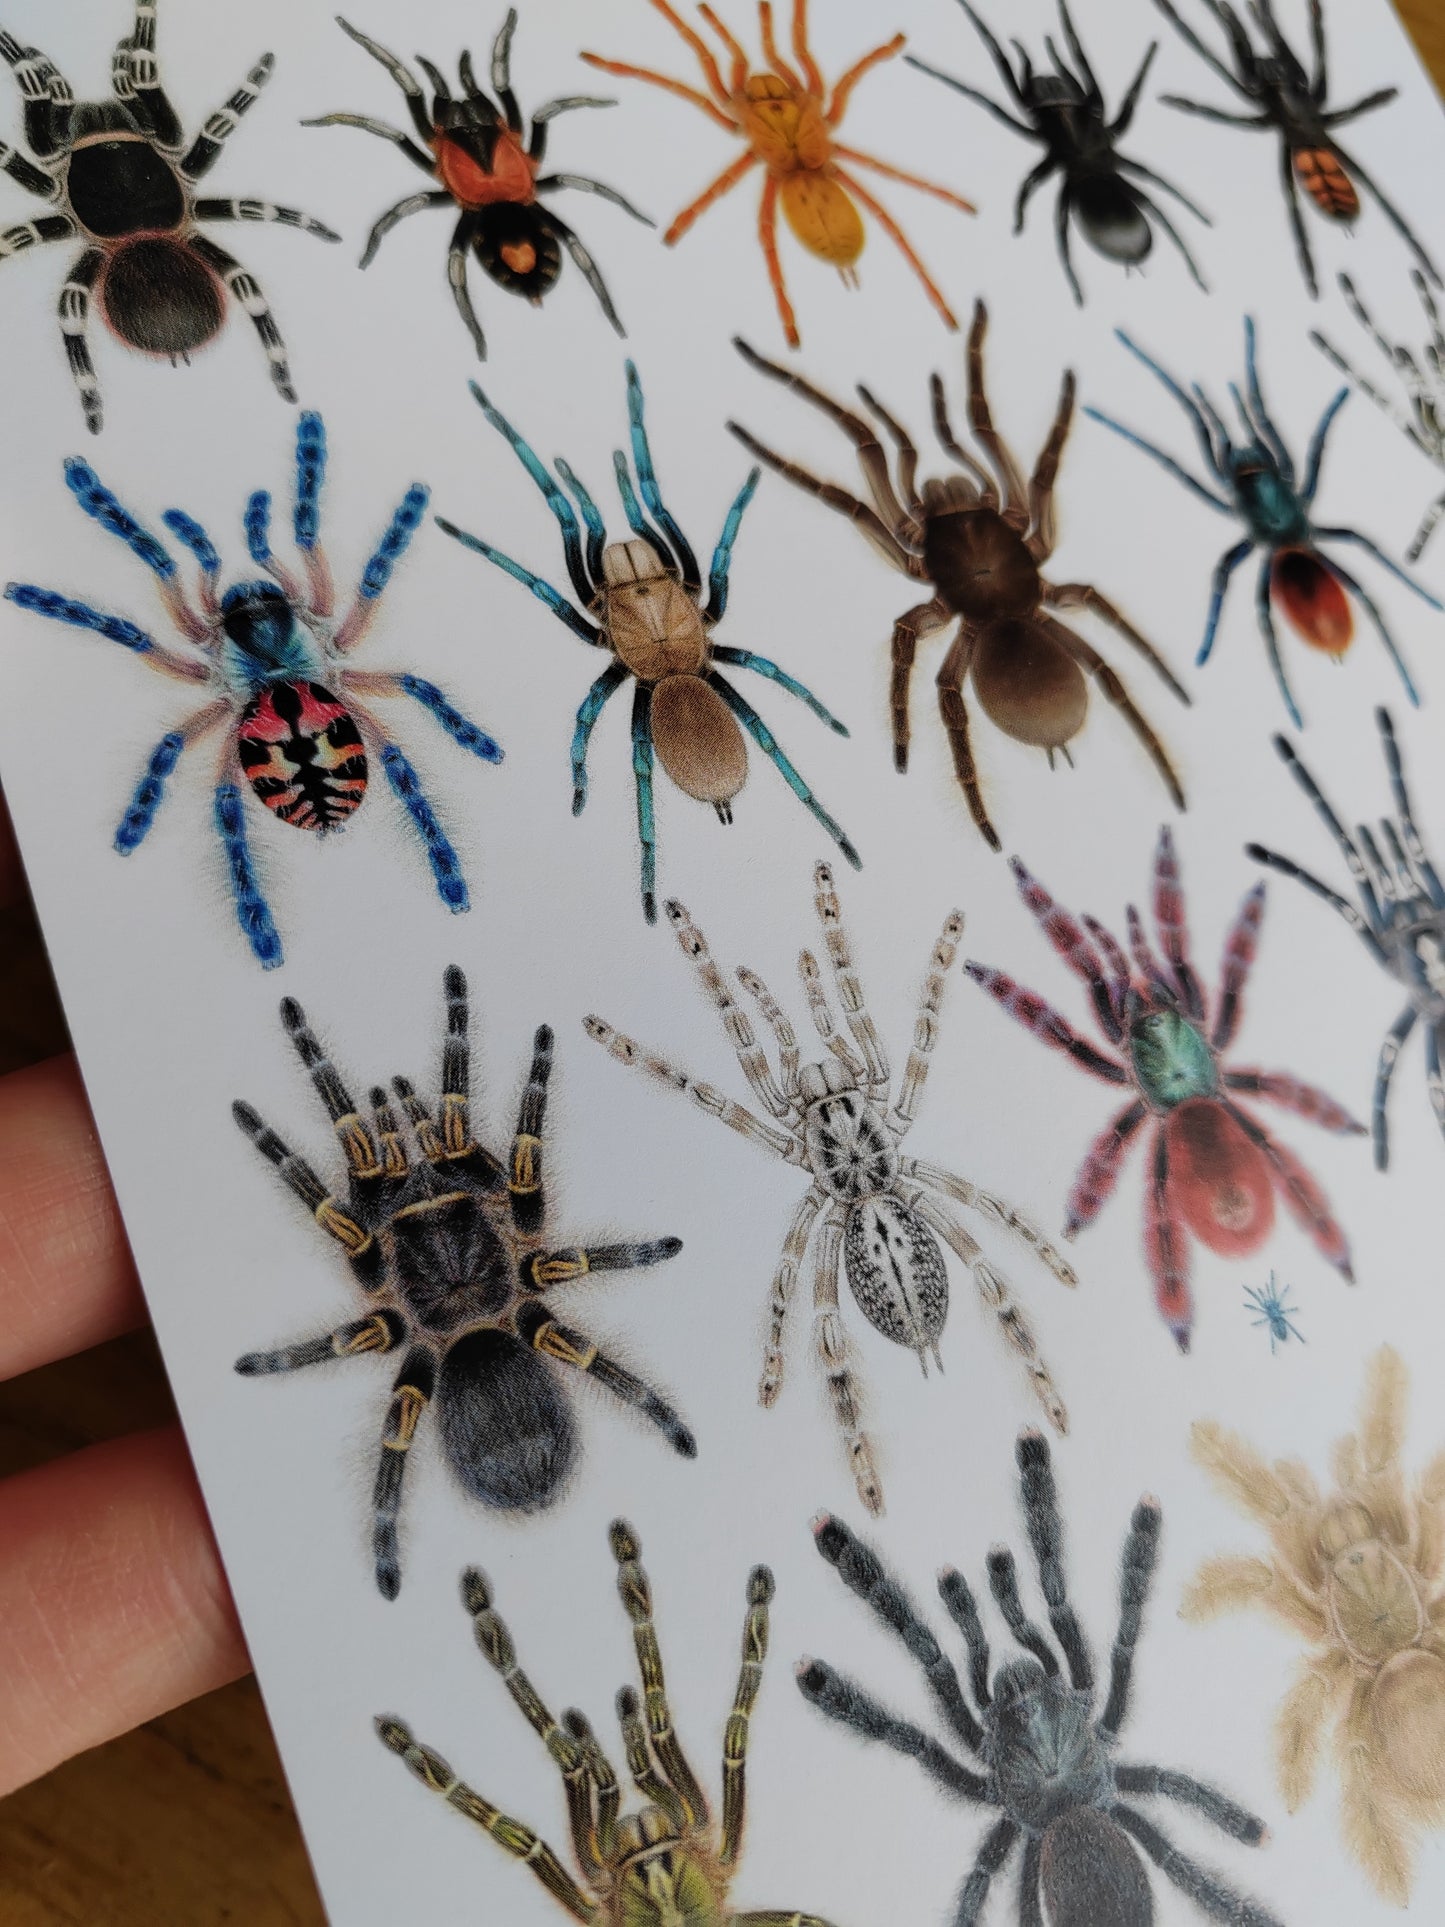 A5 size Tarantula species giant postcard